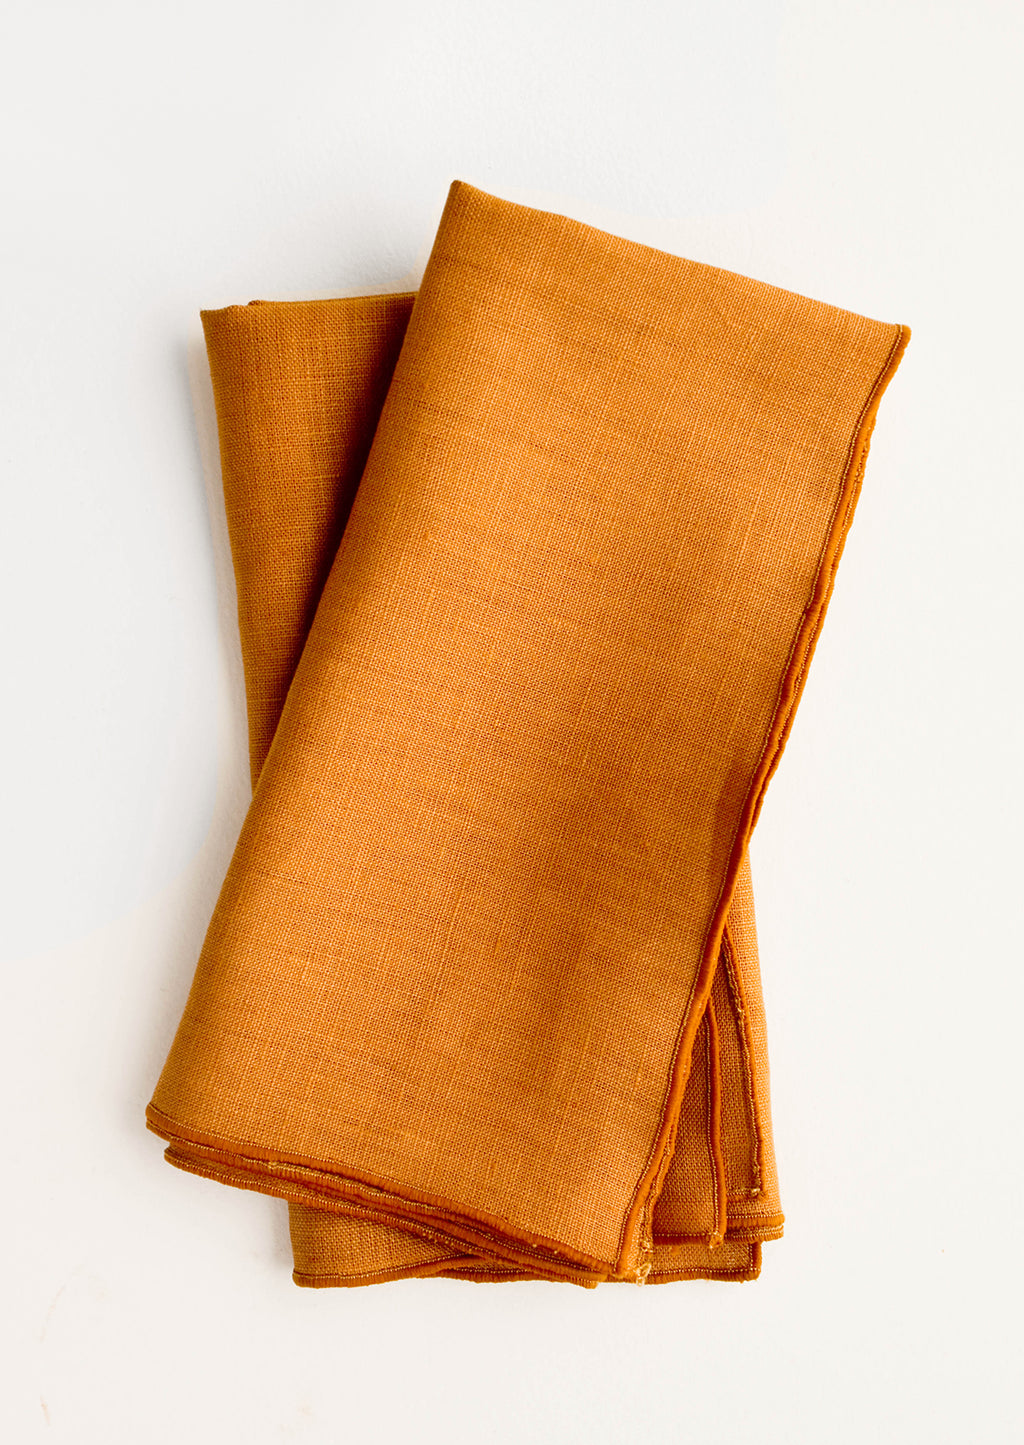 Caramel: Pair of folded linen napkins in caramel brown with tonal trim